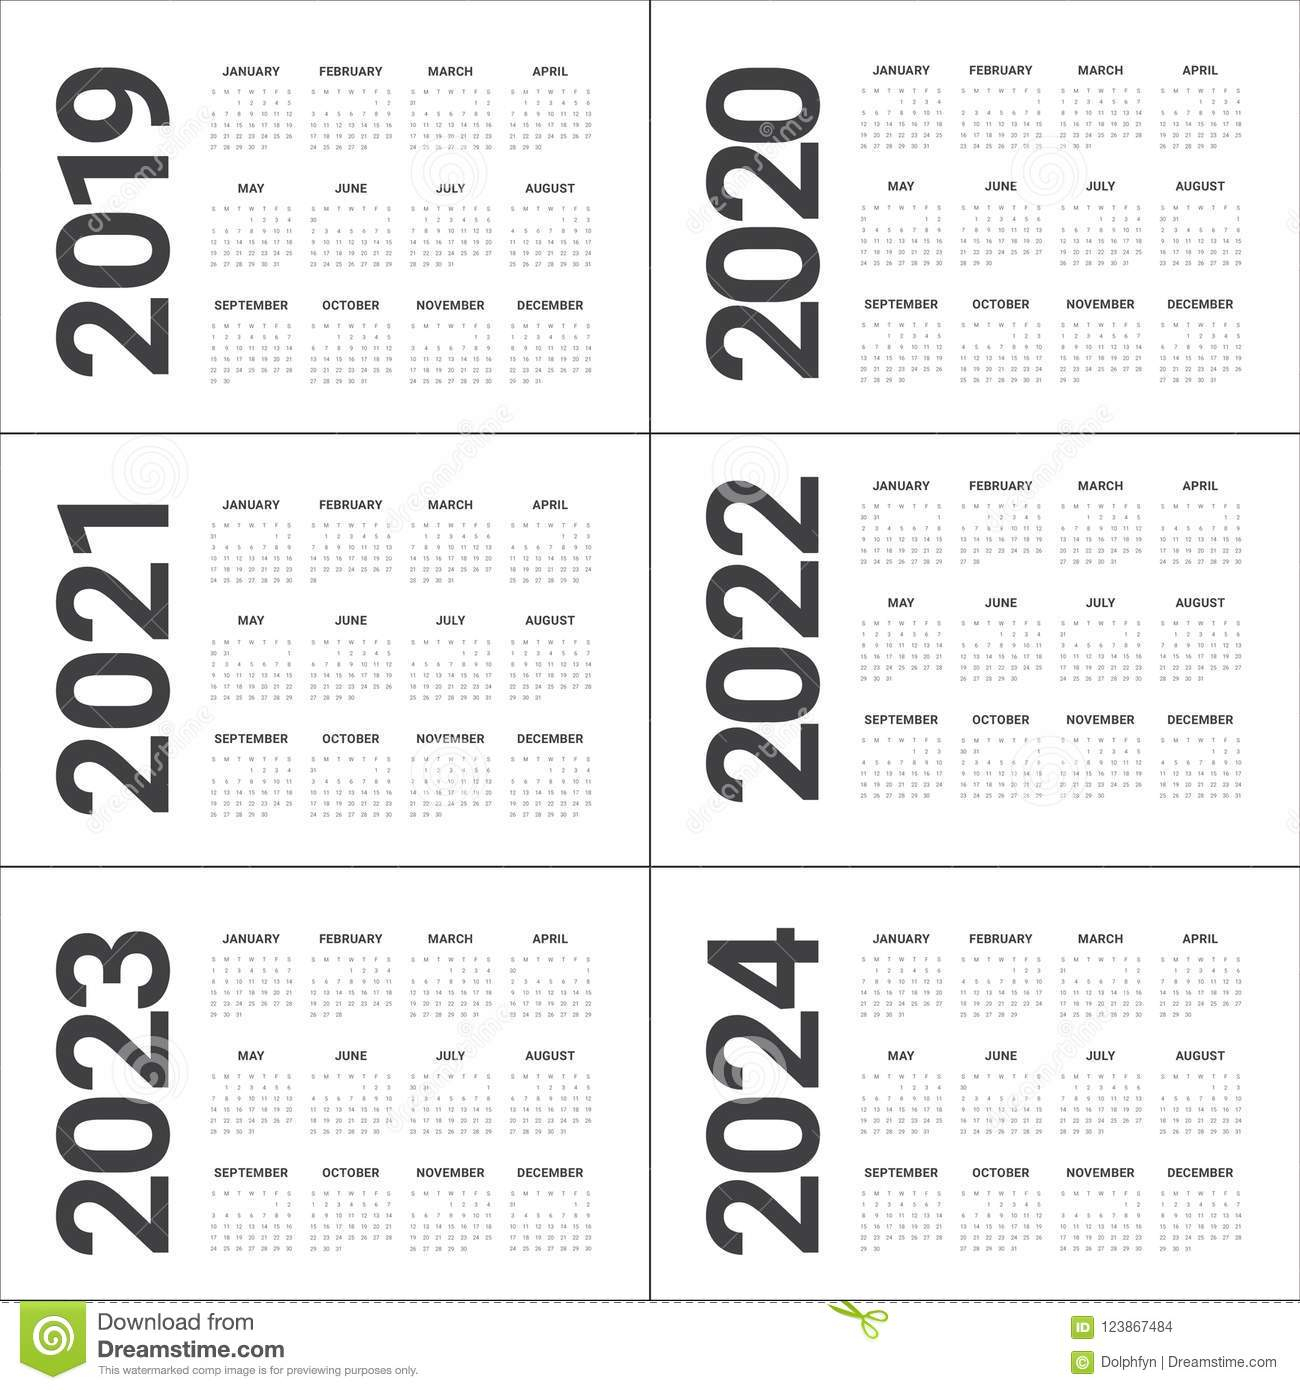 Year 2019 2020 2021 2022 2023 2024 Calendar Vector Design